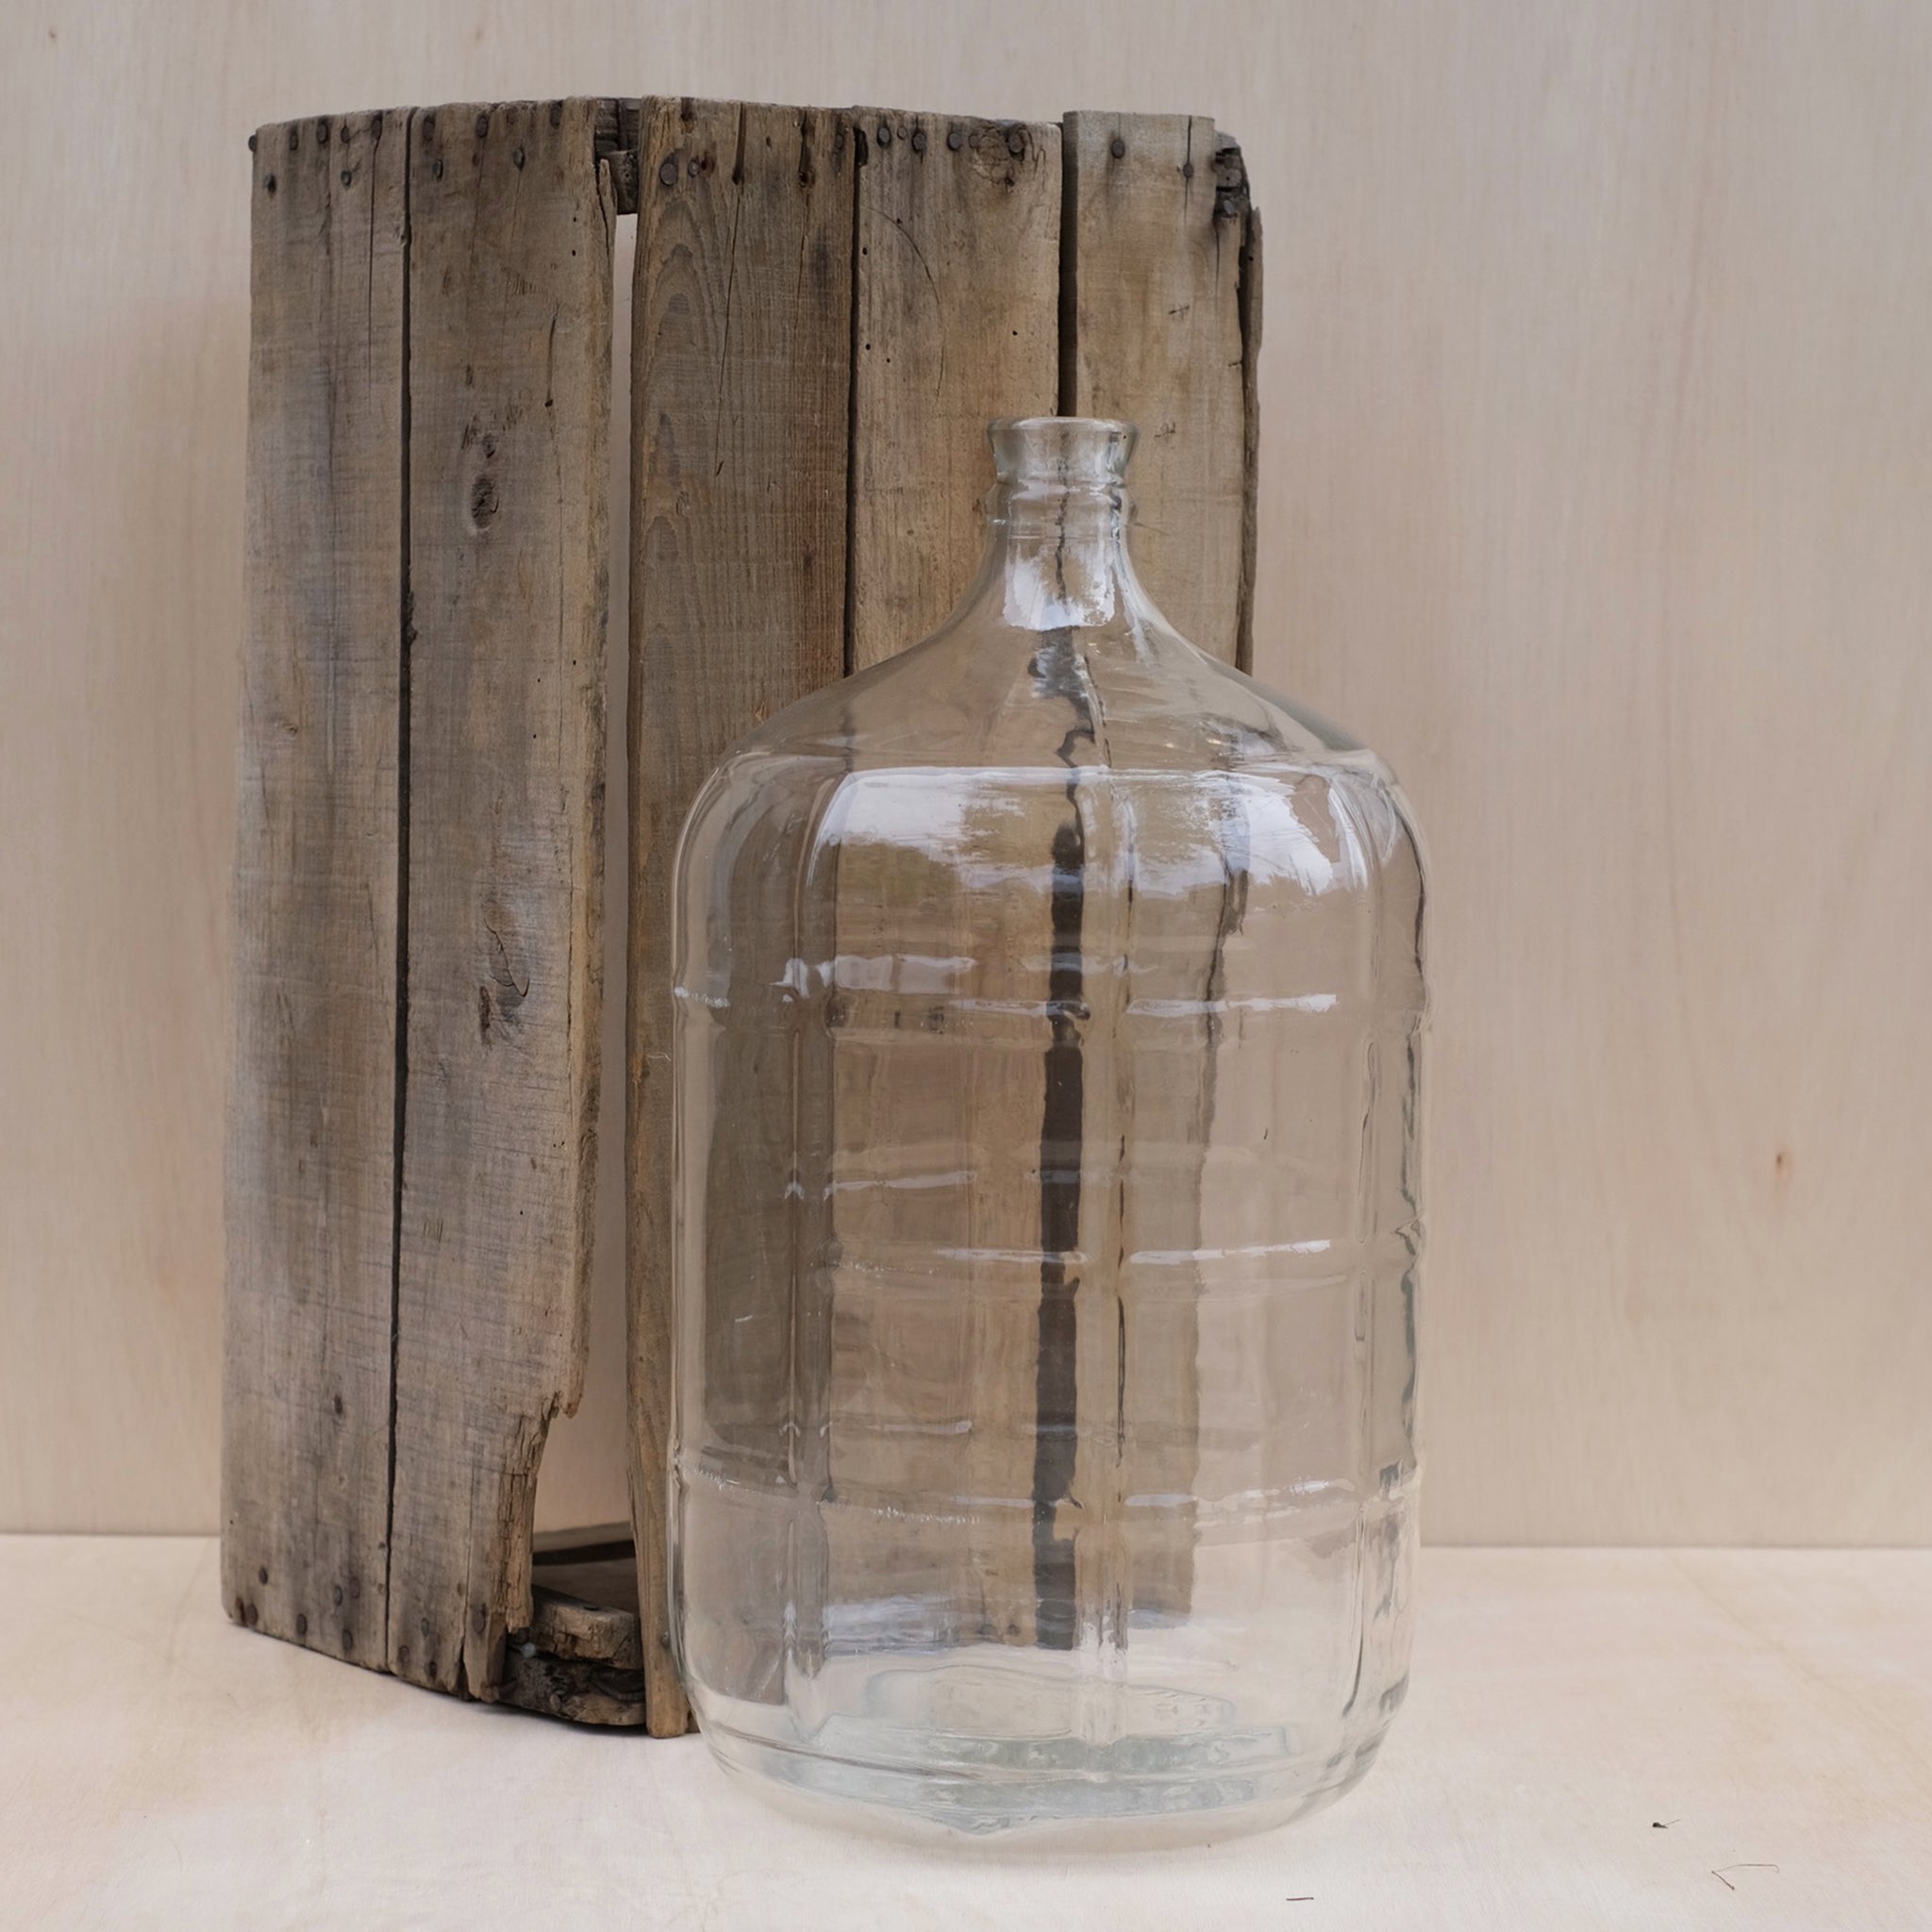 Crisa 5 Gallon Glass Water Jug